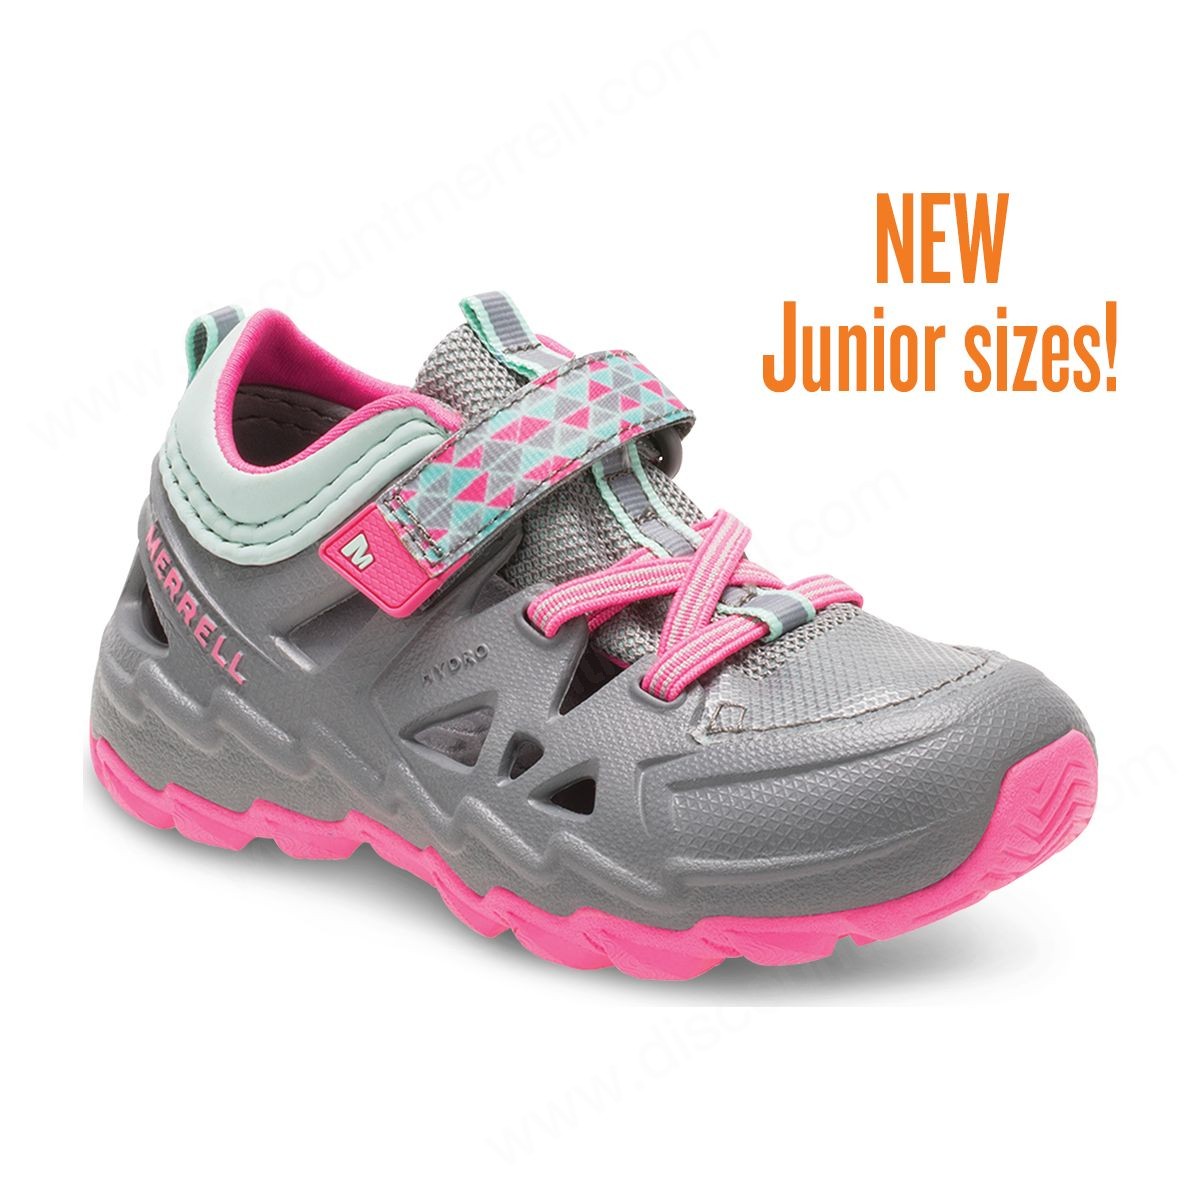 Merrell Little Kid's Hydro Junior . Sneakers Sandal Grey/pink - Merrell Little Kid's Hydro Junior . Sneakers Sandal Grey/pink